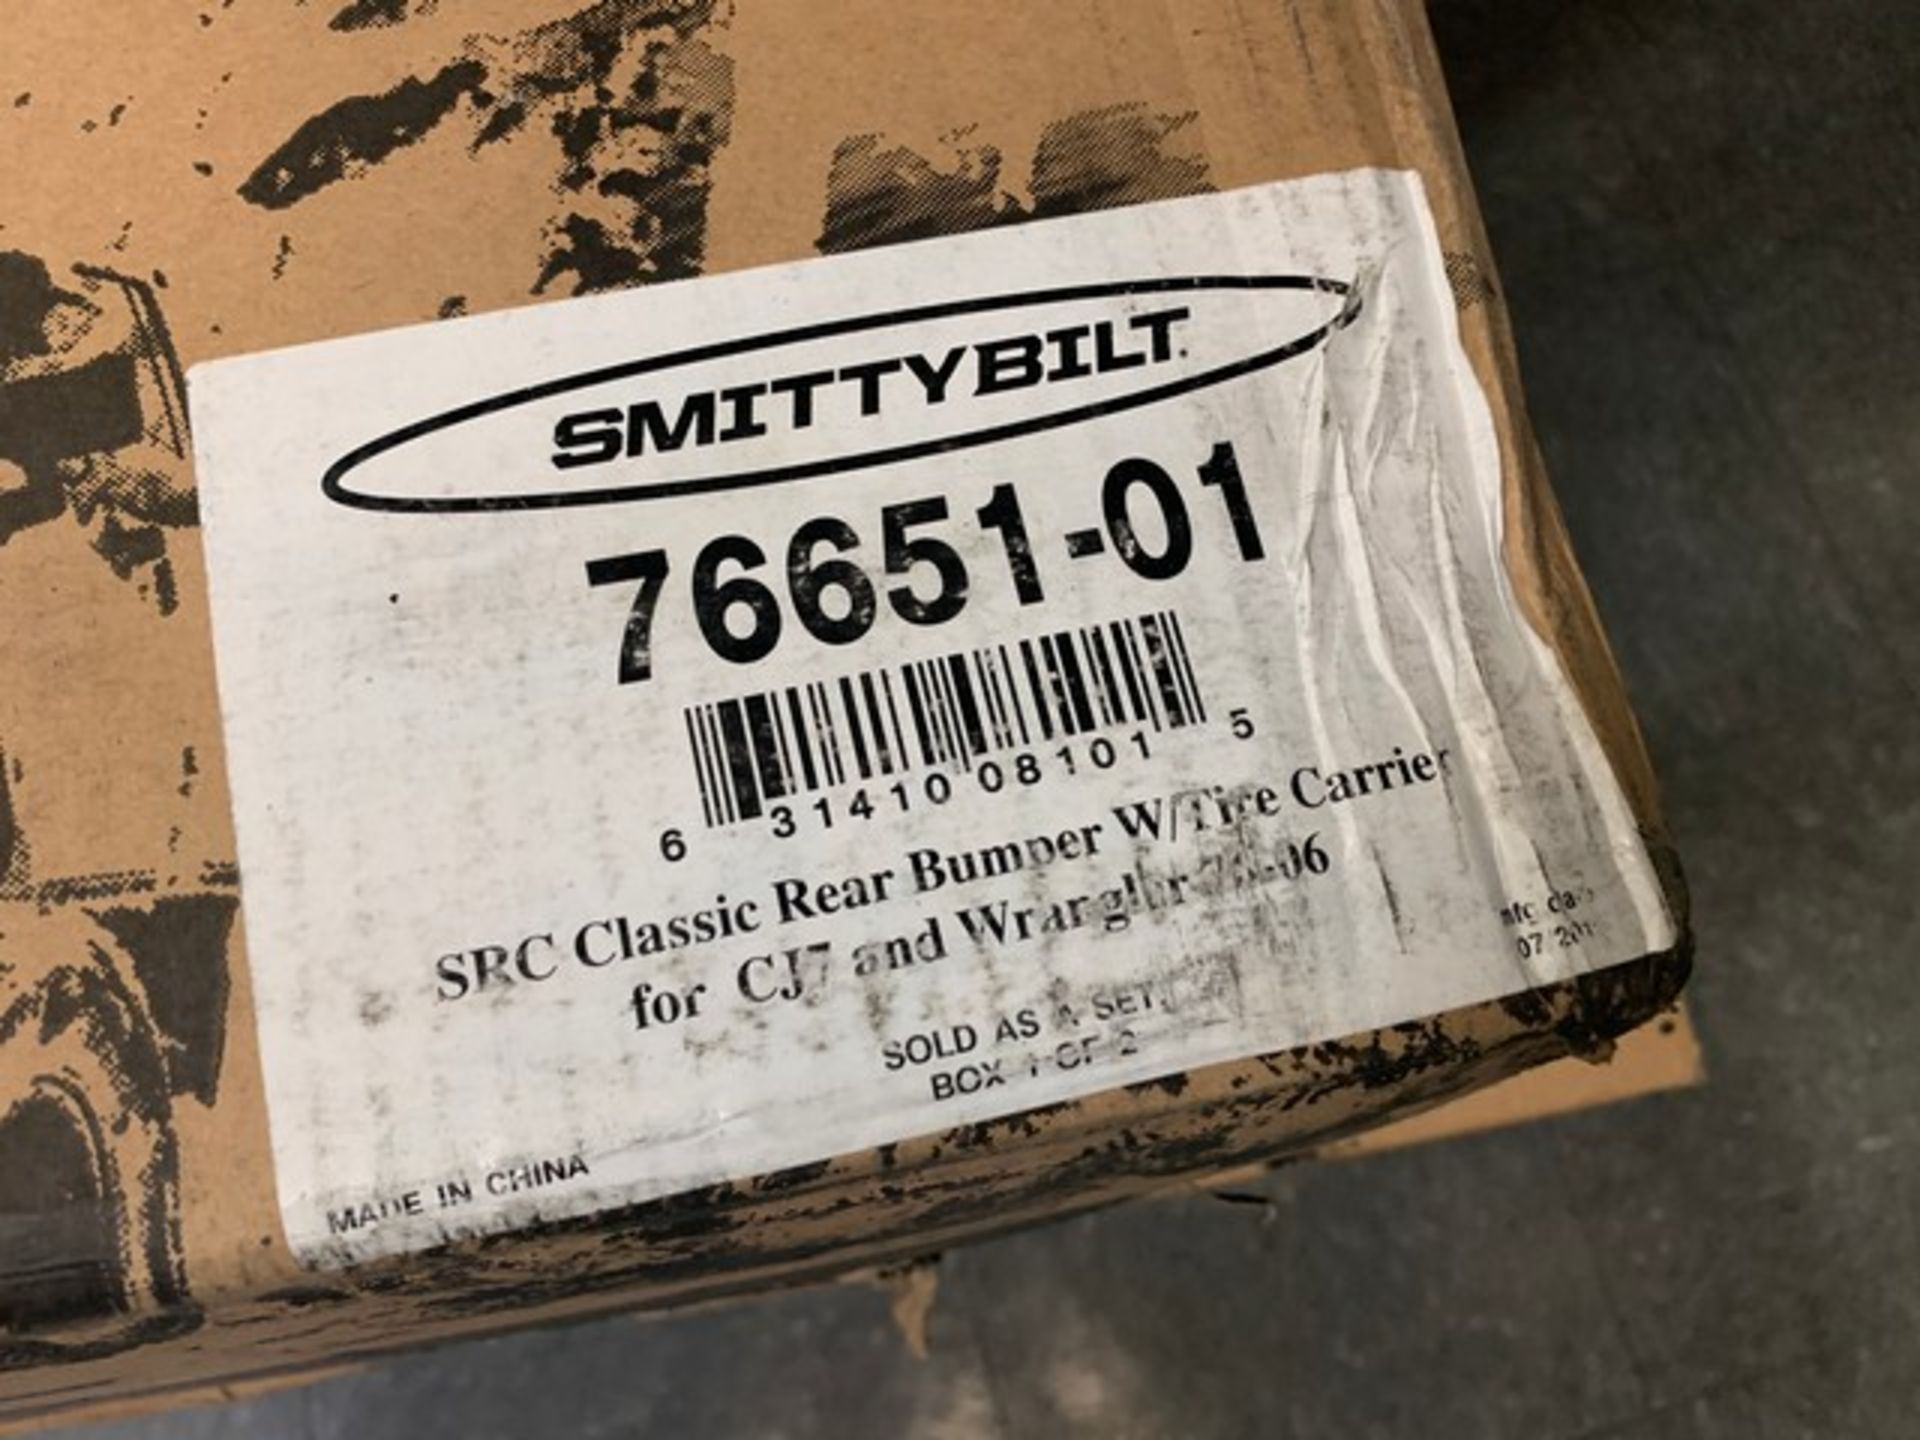 SMITTYBILT CLASSIC REAR BUMPER FOR CJ7 WRANGLER WITH WHEEL CARRIER - Image 2 of 2